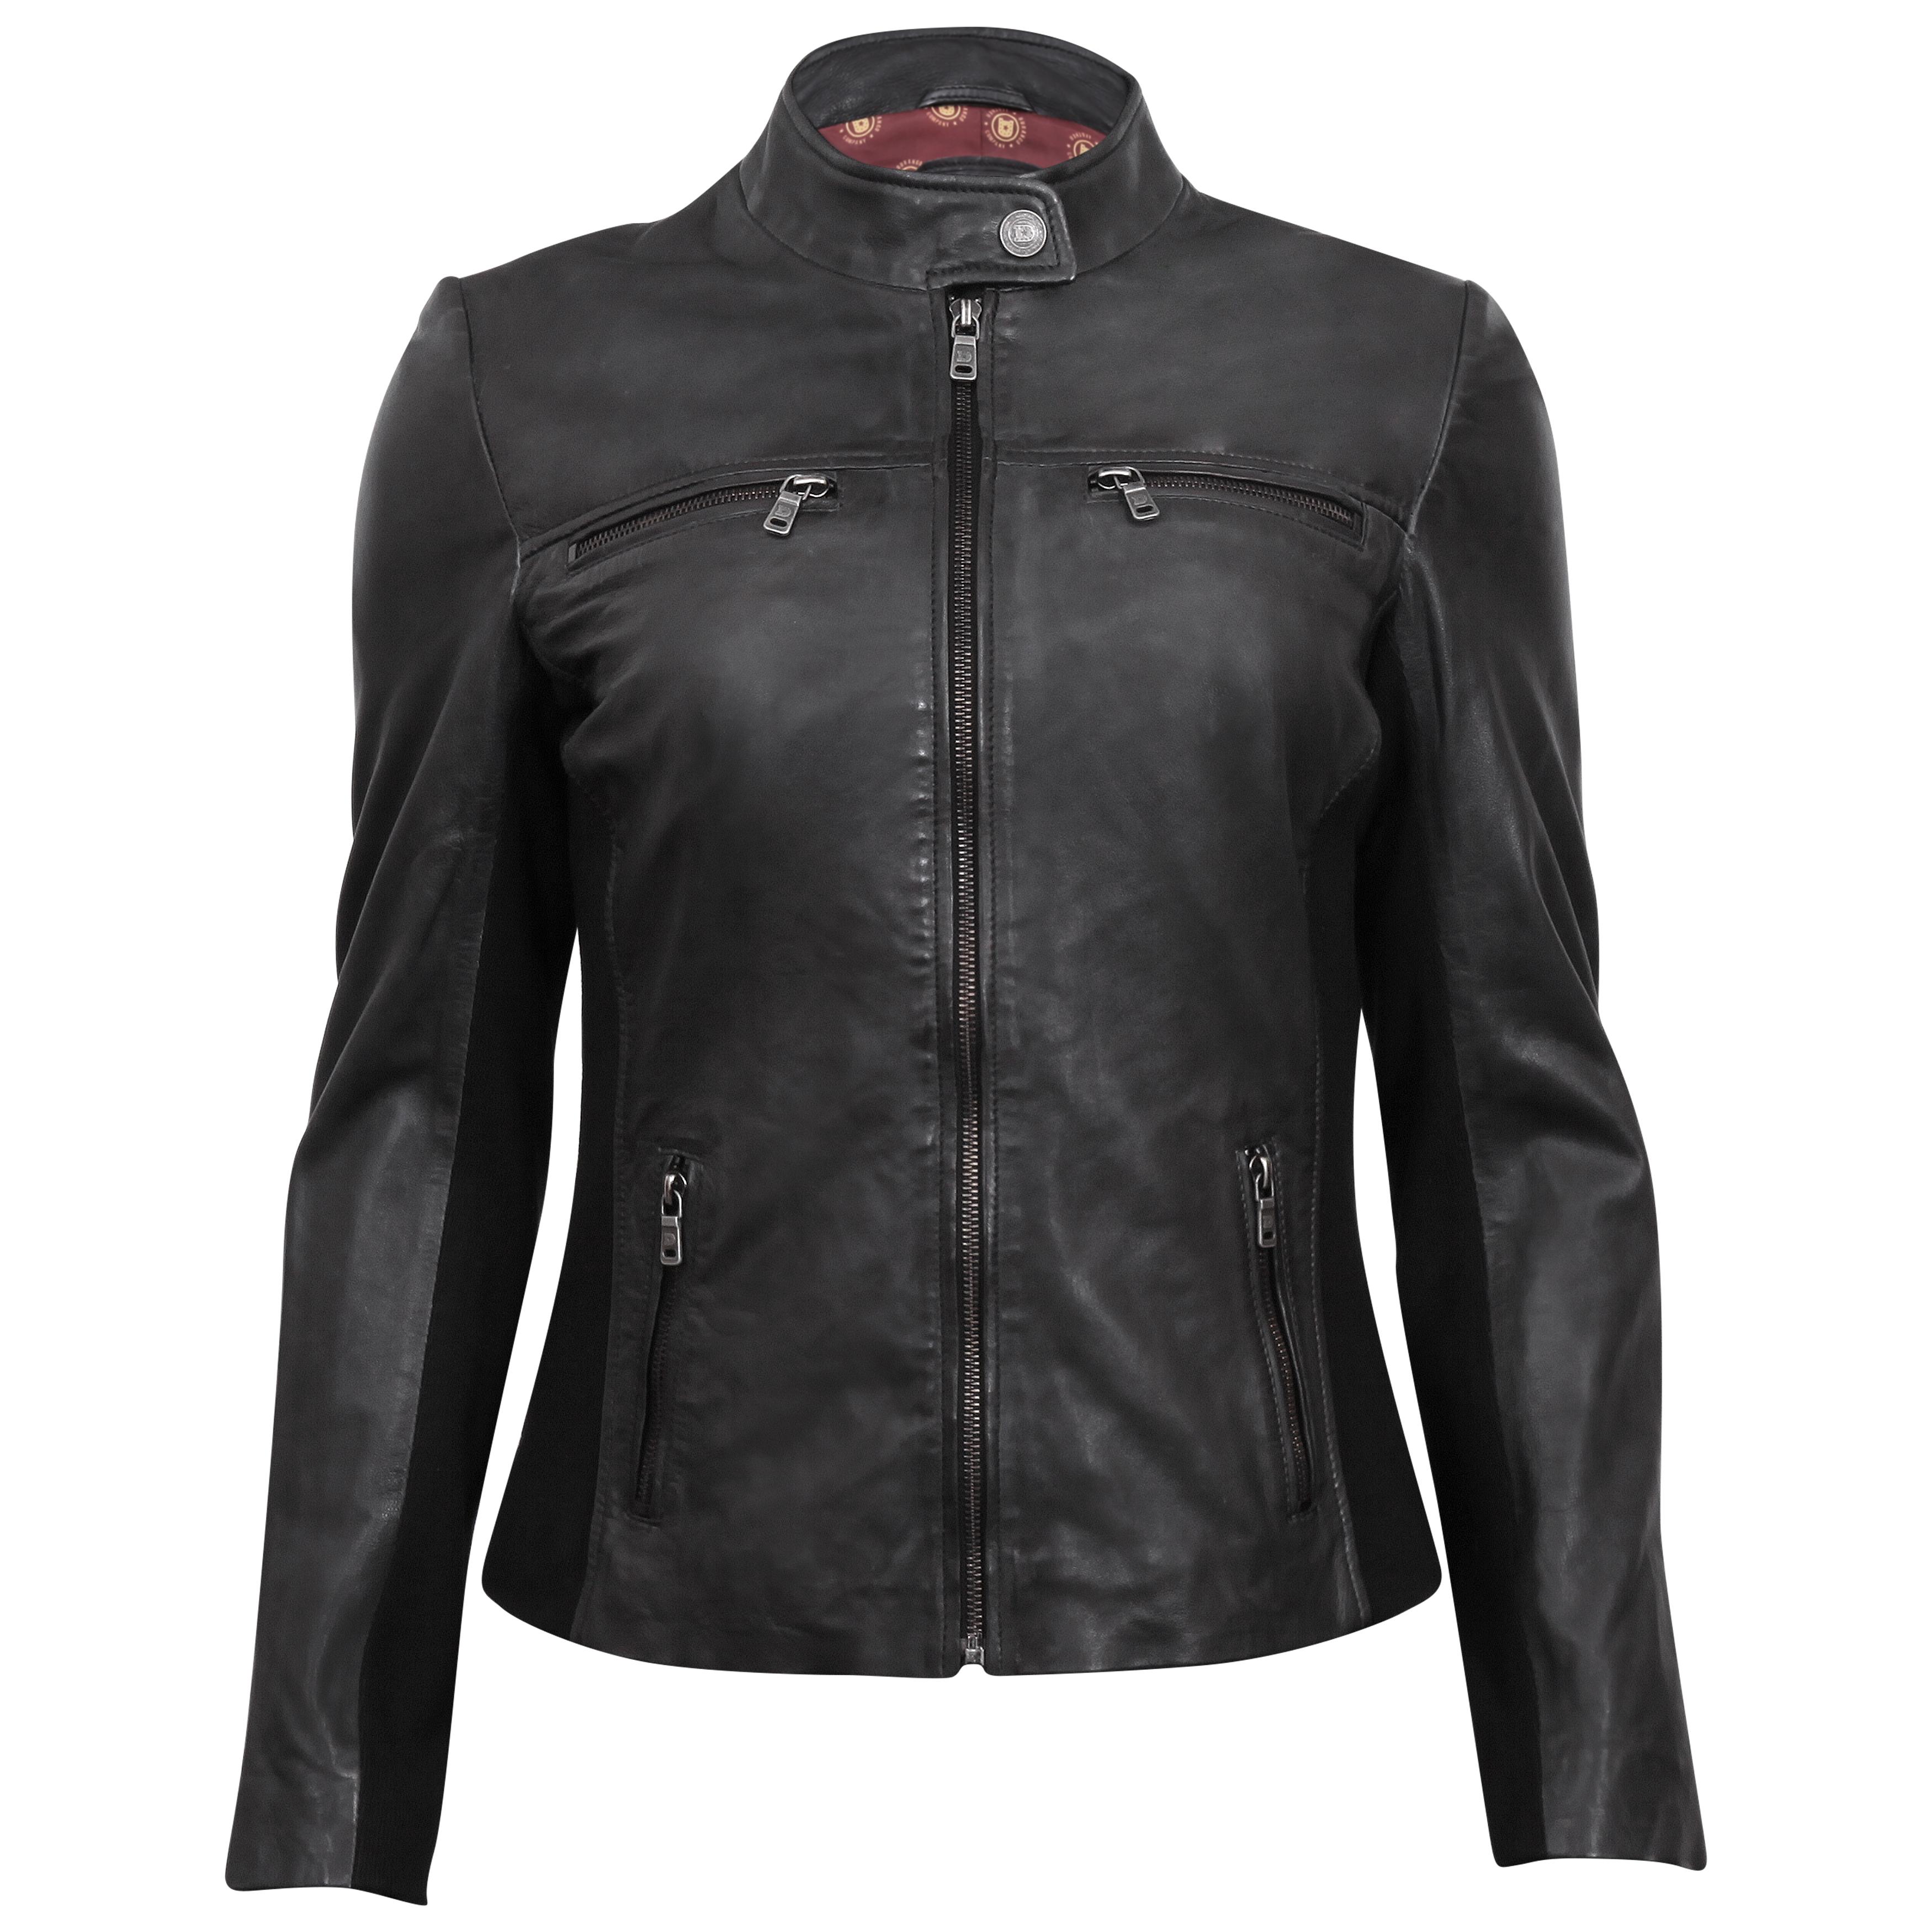 Durango Leather Company Women's Damsel Jacket, DLC0044